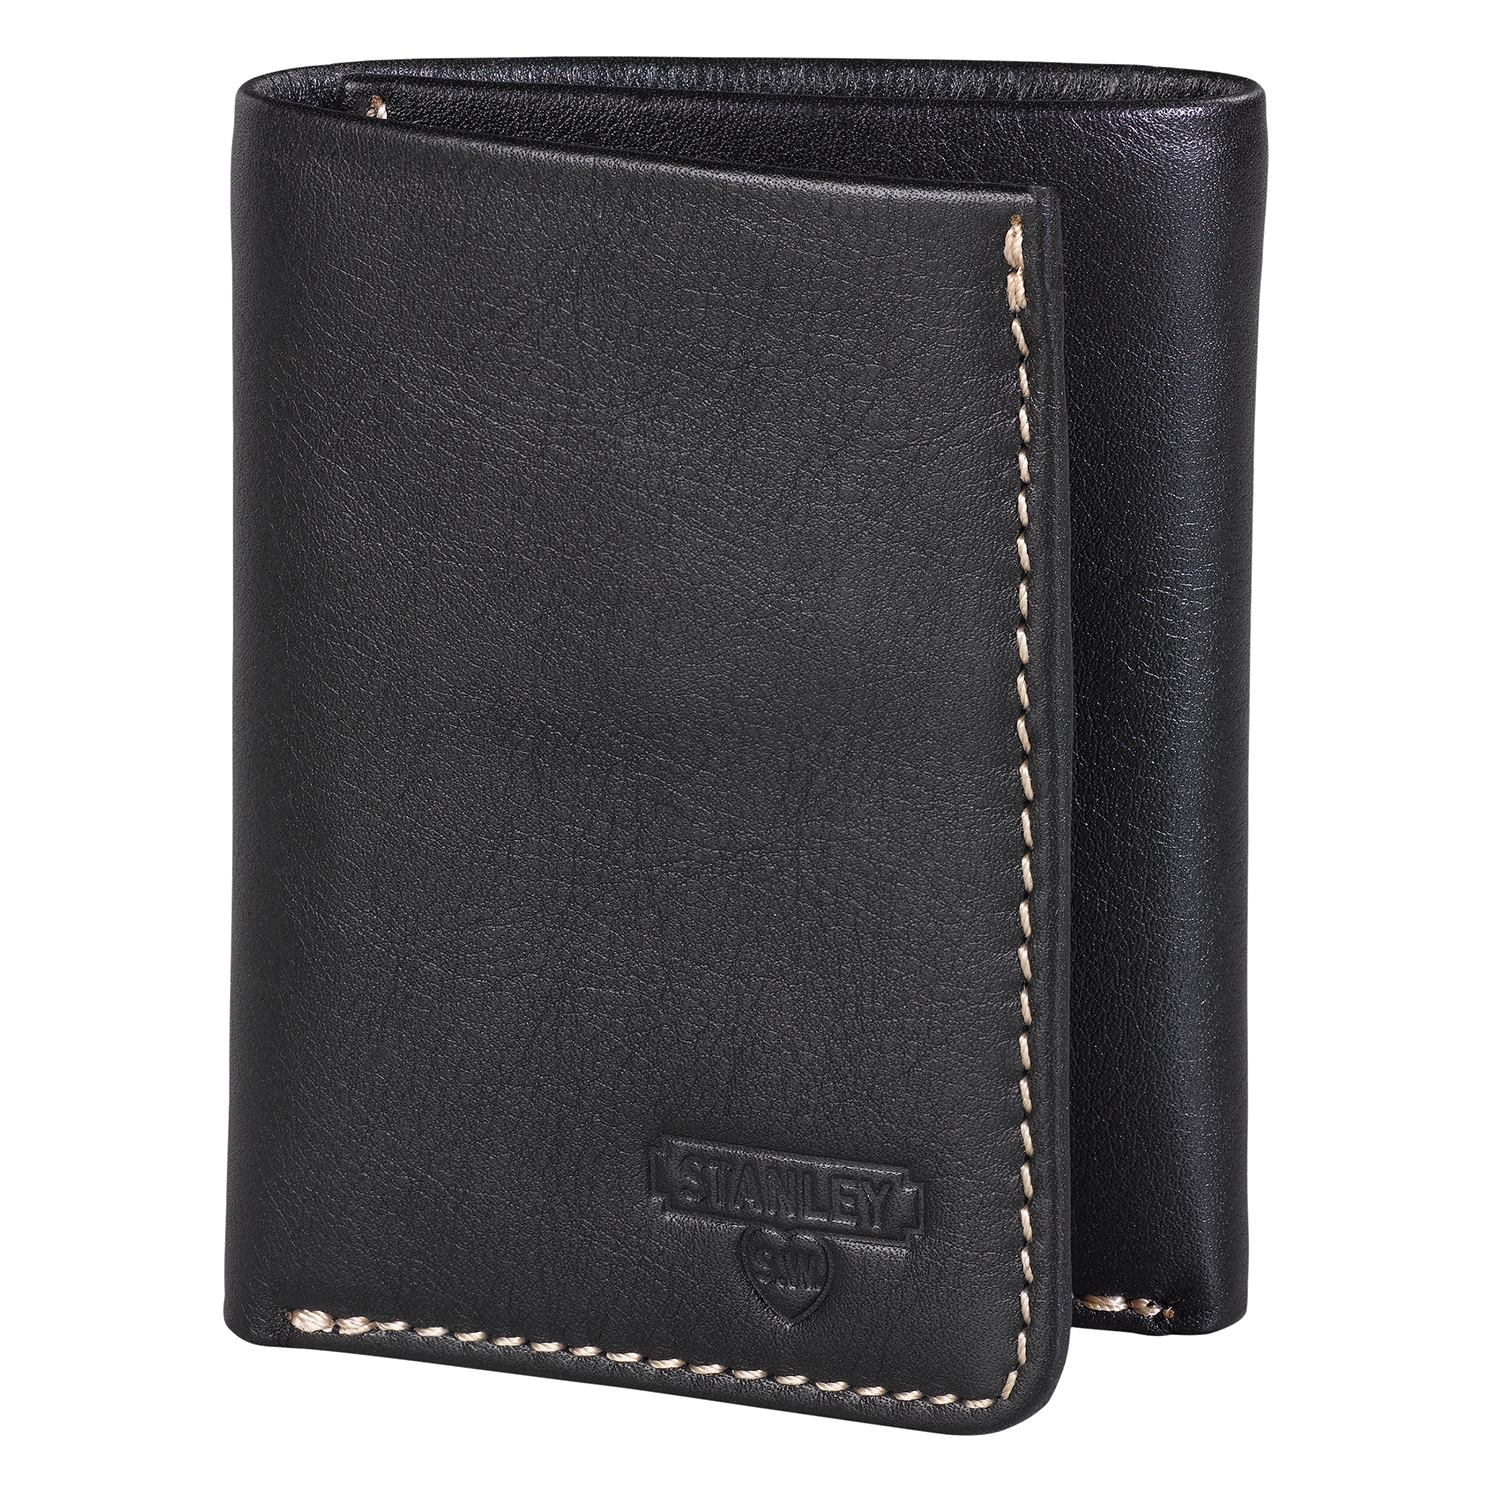 Stanley Tools - Black & Tan Tri-Fold Leather Wallet in Metal ...